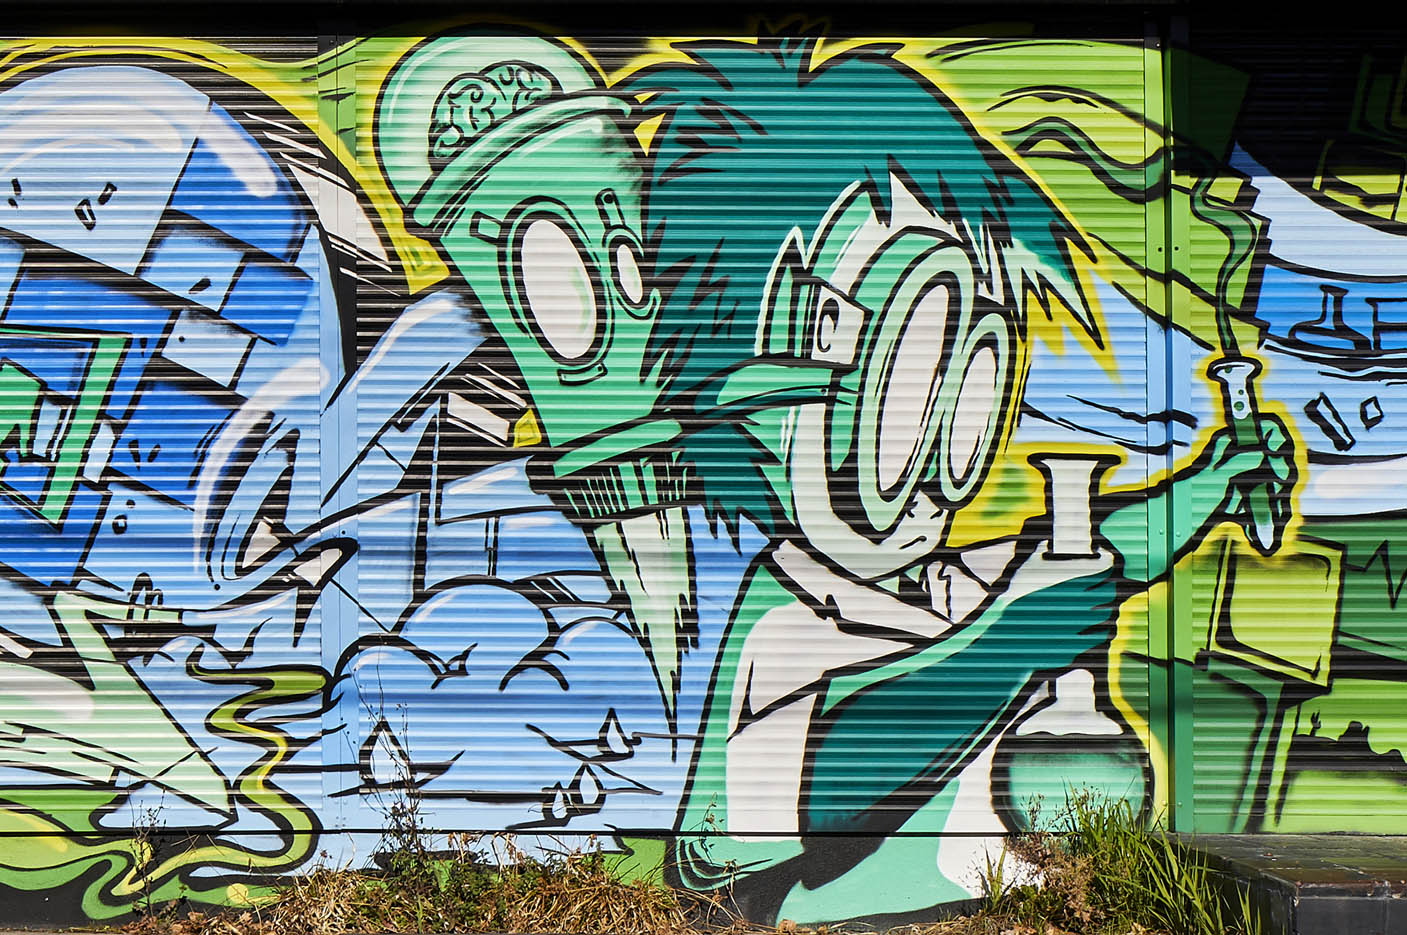 graffiti sketches characters